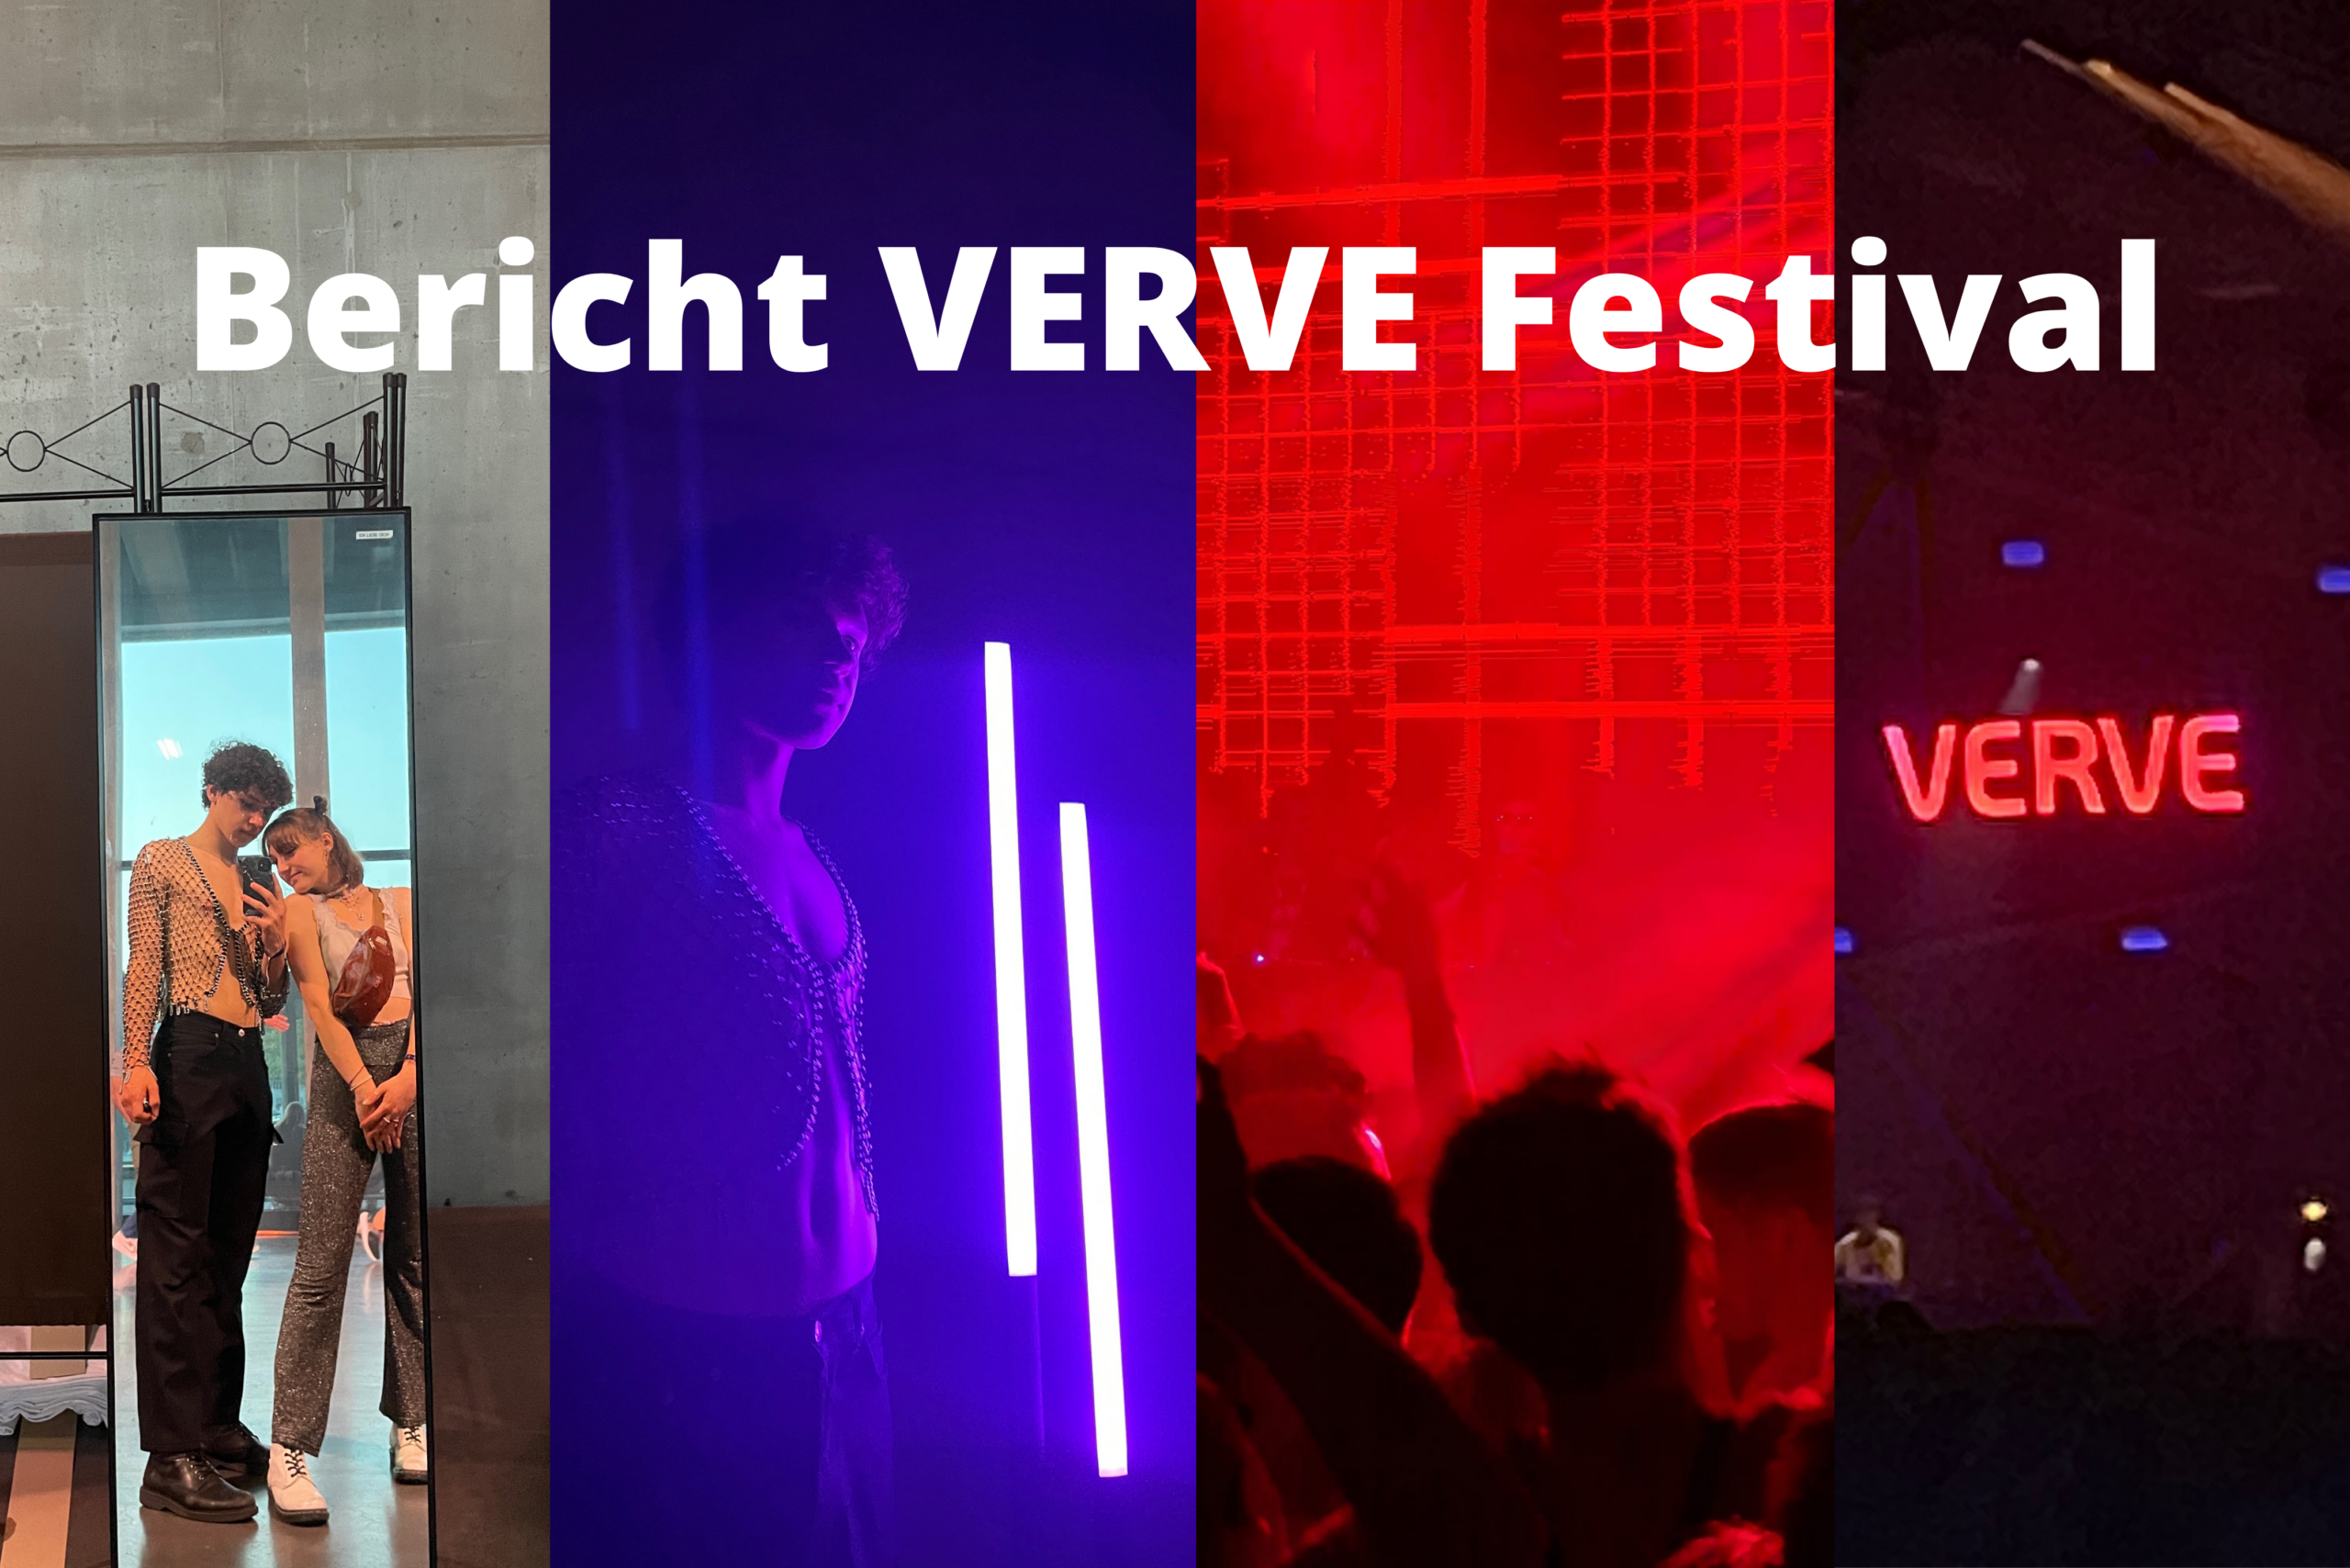 Verve Techno Festival Bericht – Lohnt es sich?